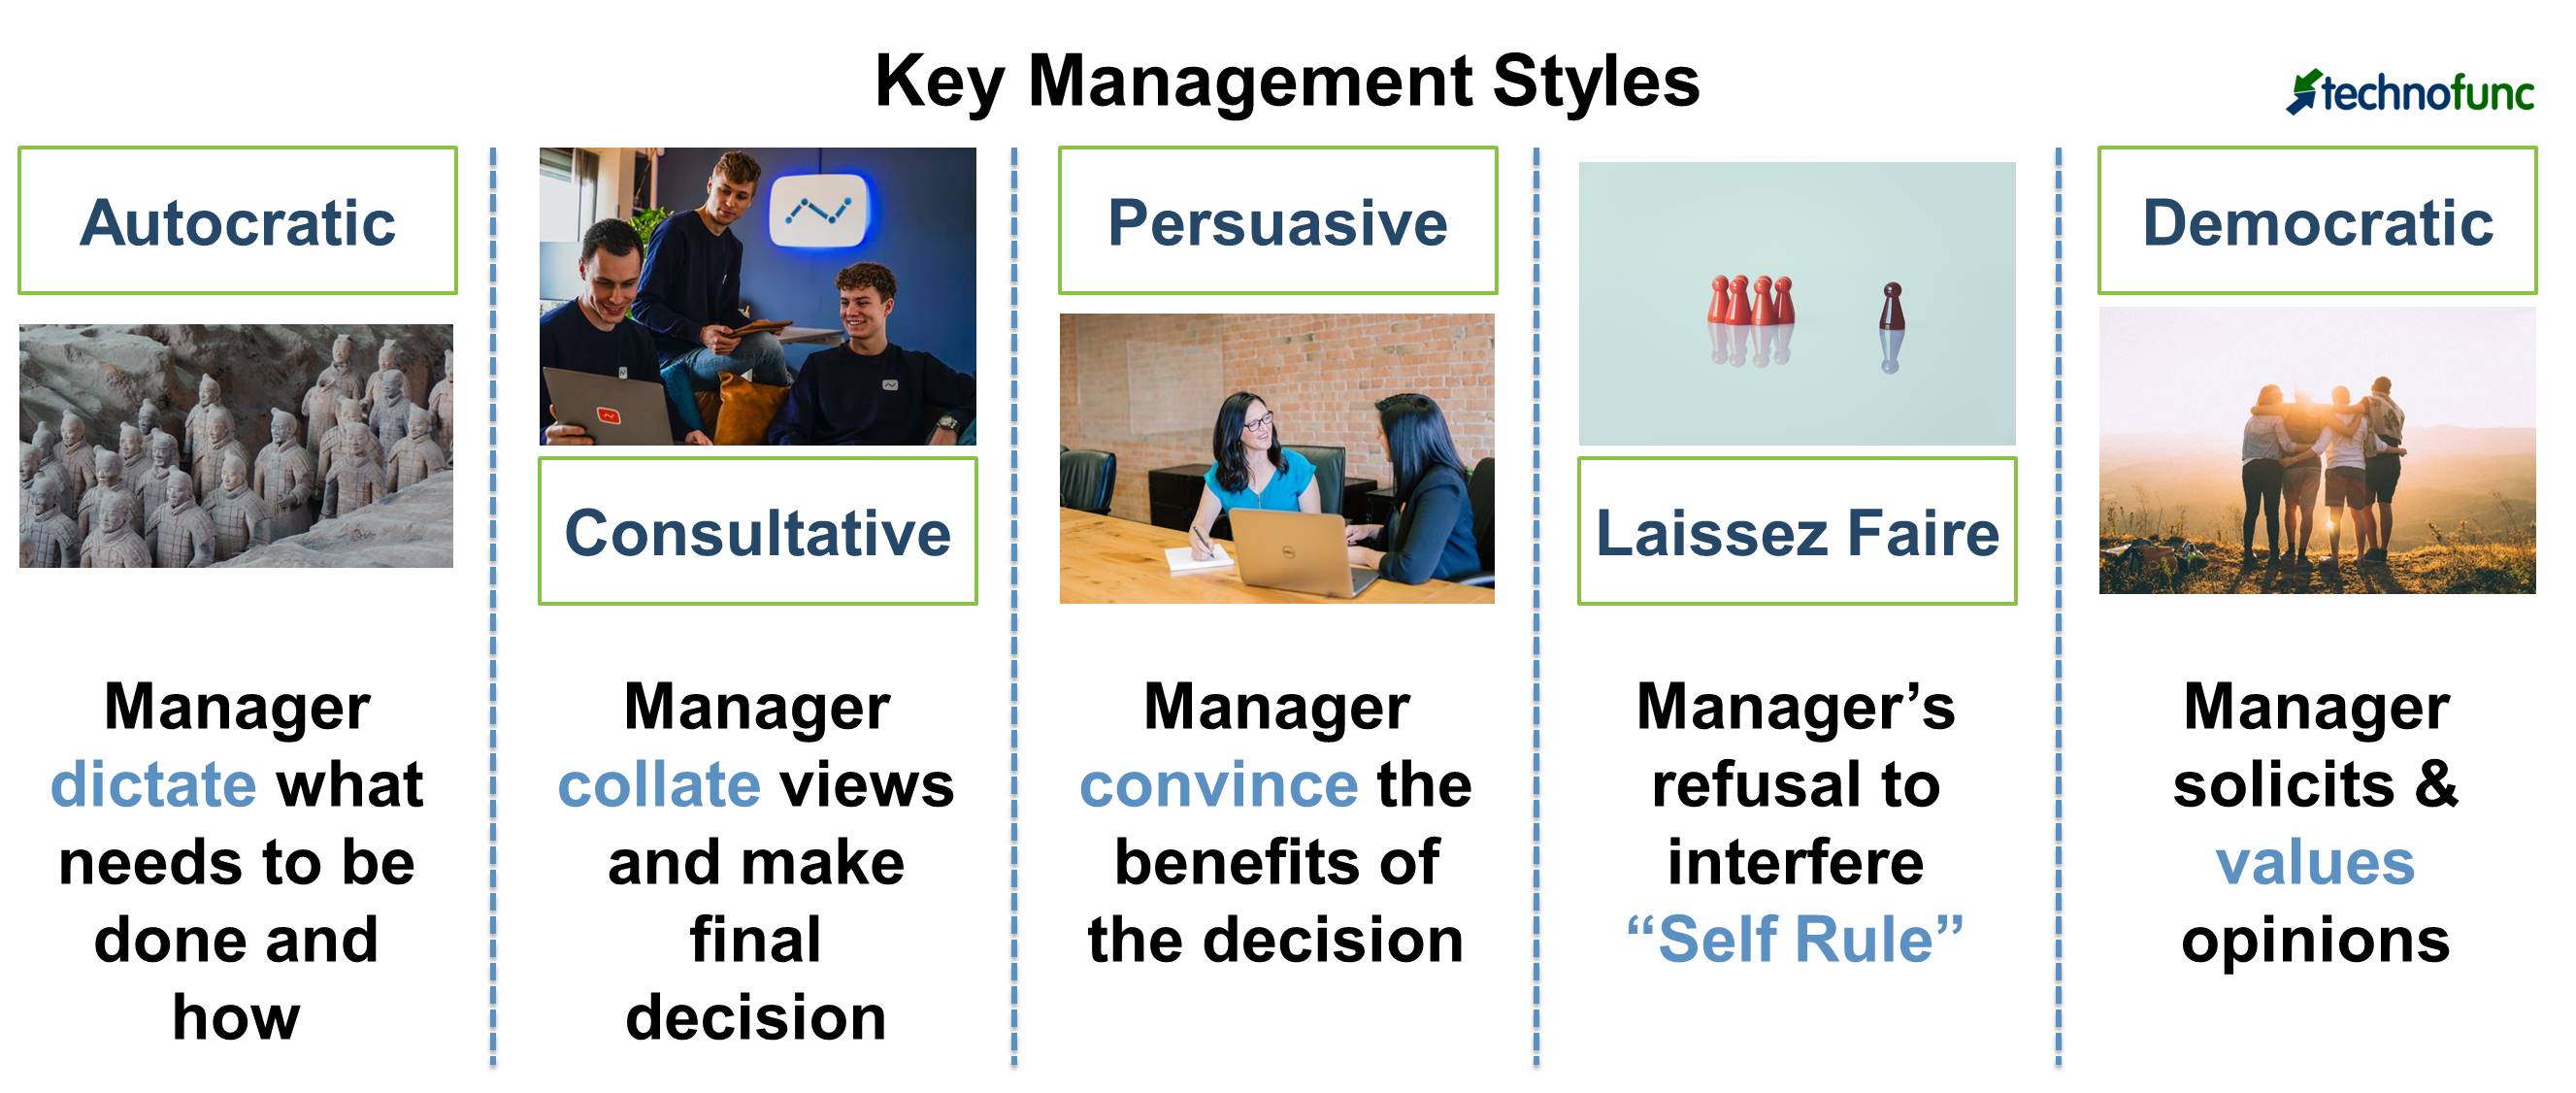 Key Management Styles